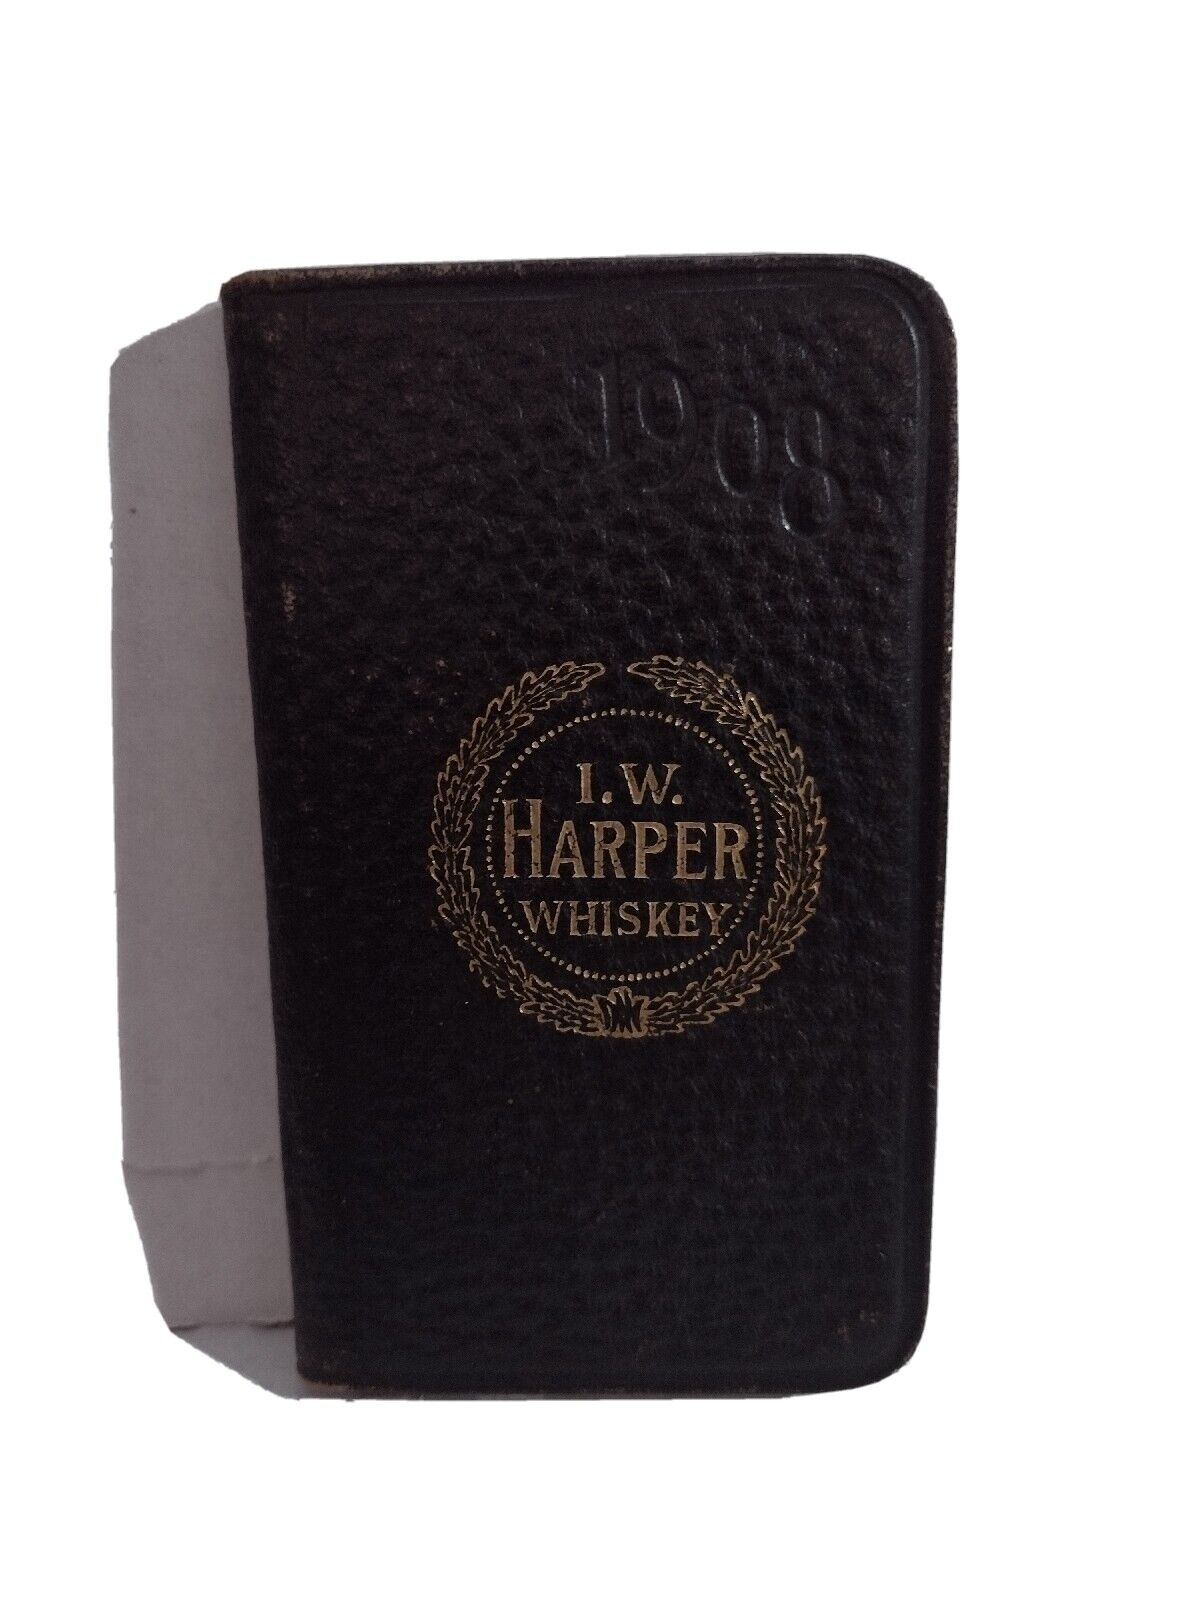 1908 I. W. Harper Whiskey Advertising Pocket Calendar Leather Book Booklet